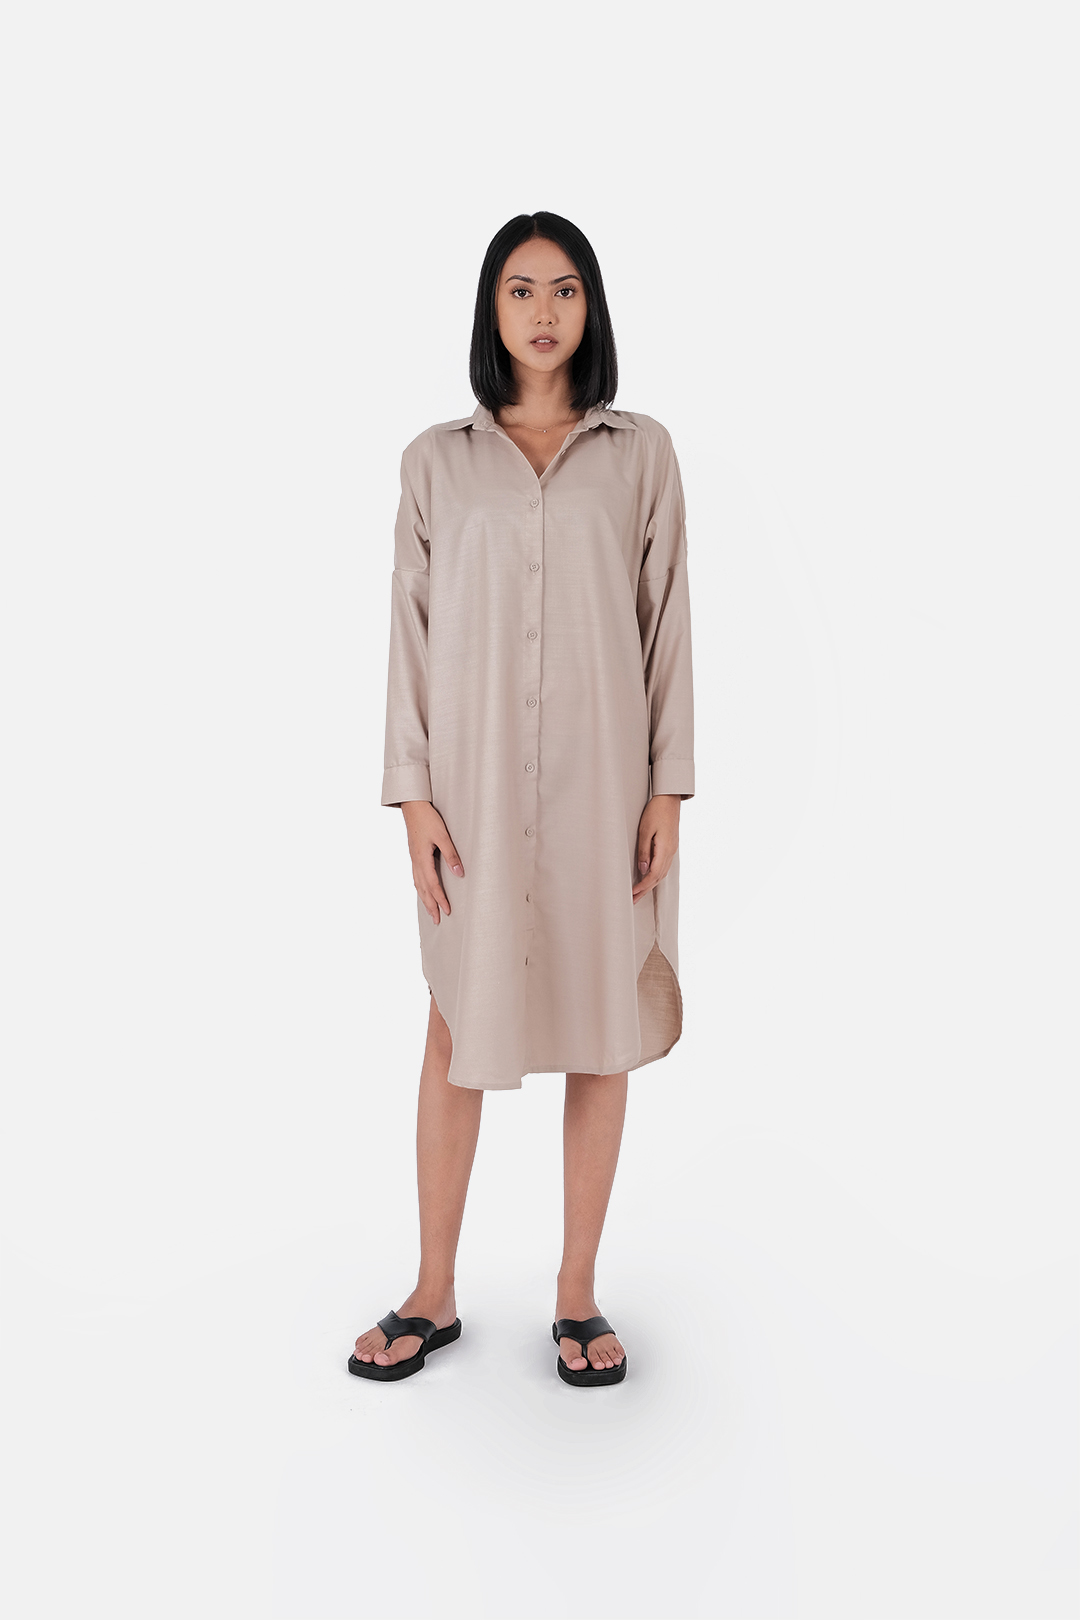 VIDOJ – MISSY KHAKI SHIRT DRESS